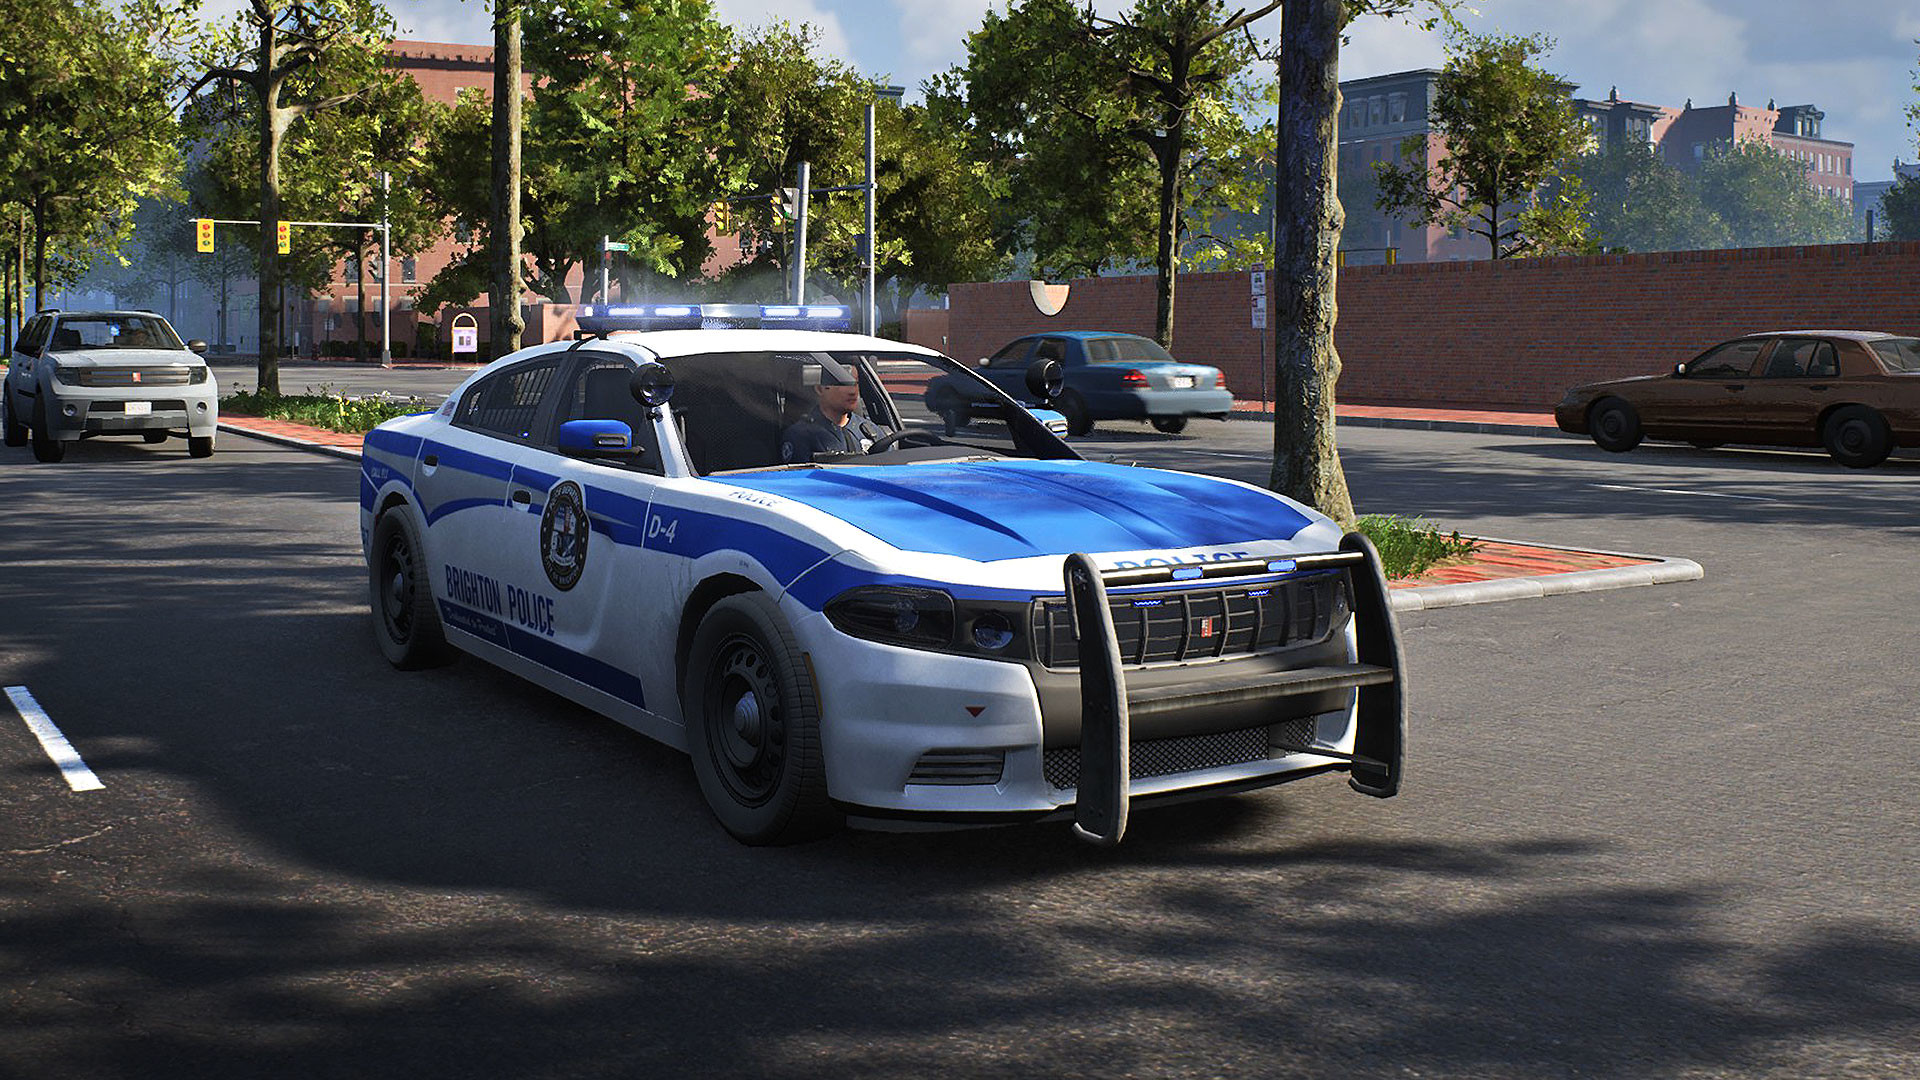 Police Simulator Patrol Officers débarque sur consoles